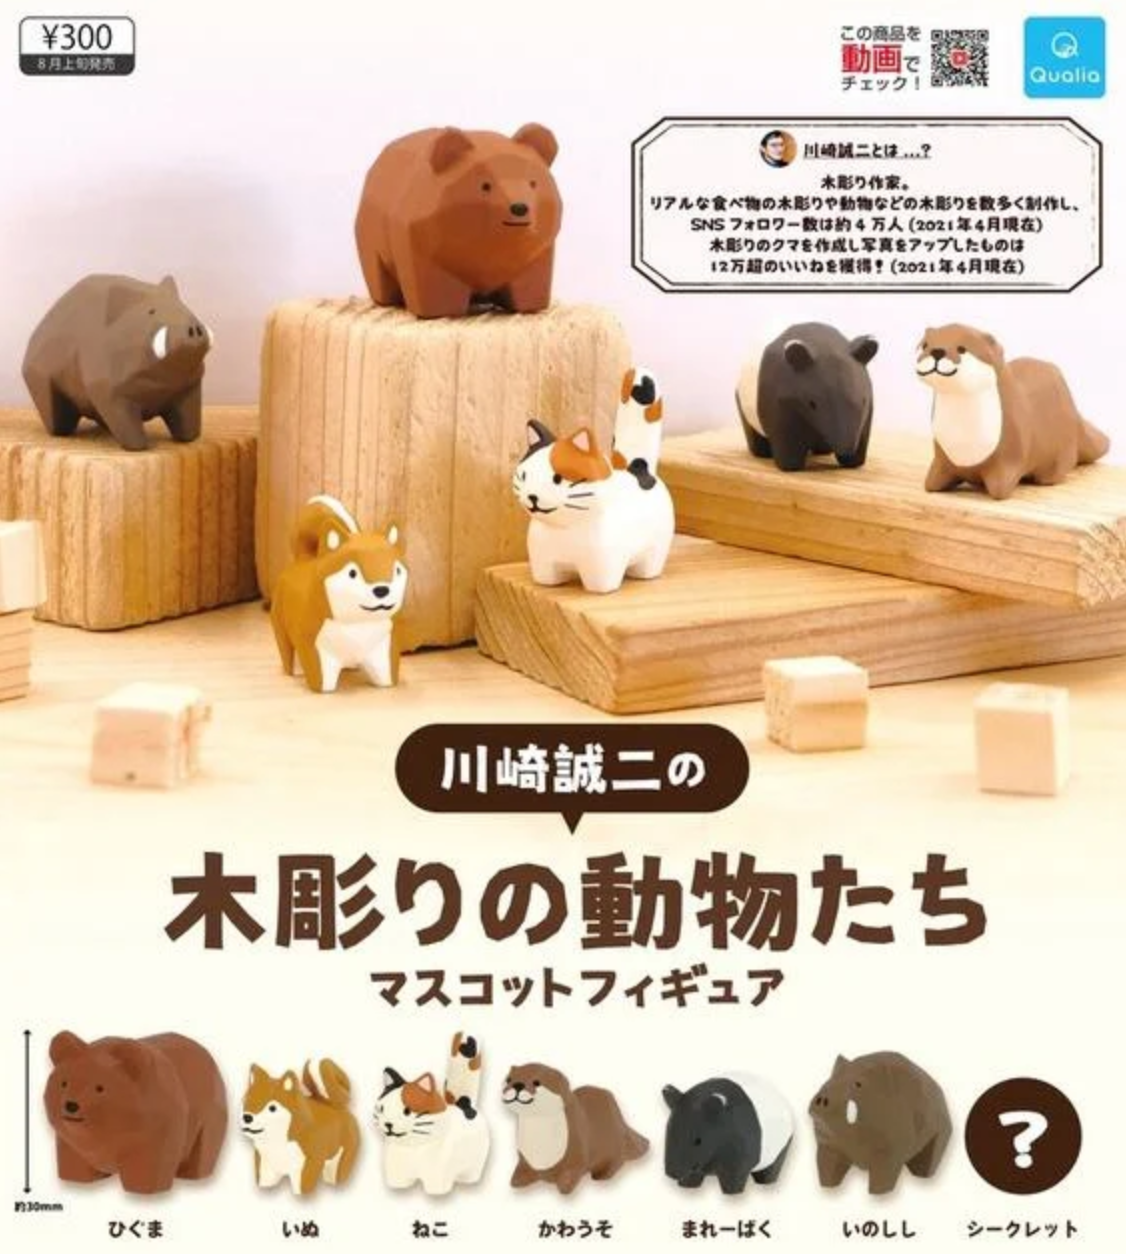 Qualia Gashapon Kawasaki Seiji Wood Carving Animal Part 1 6 Collection Figure Set